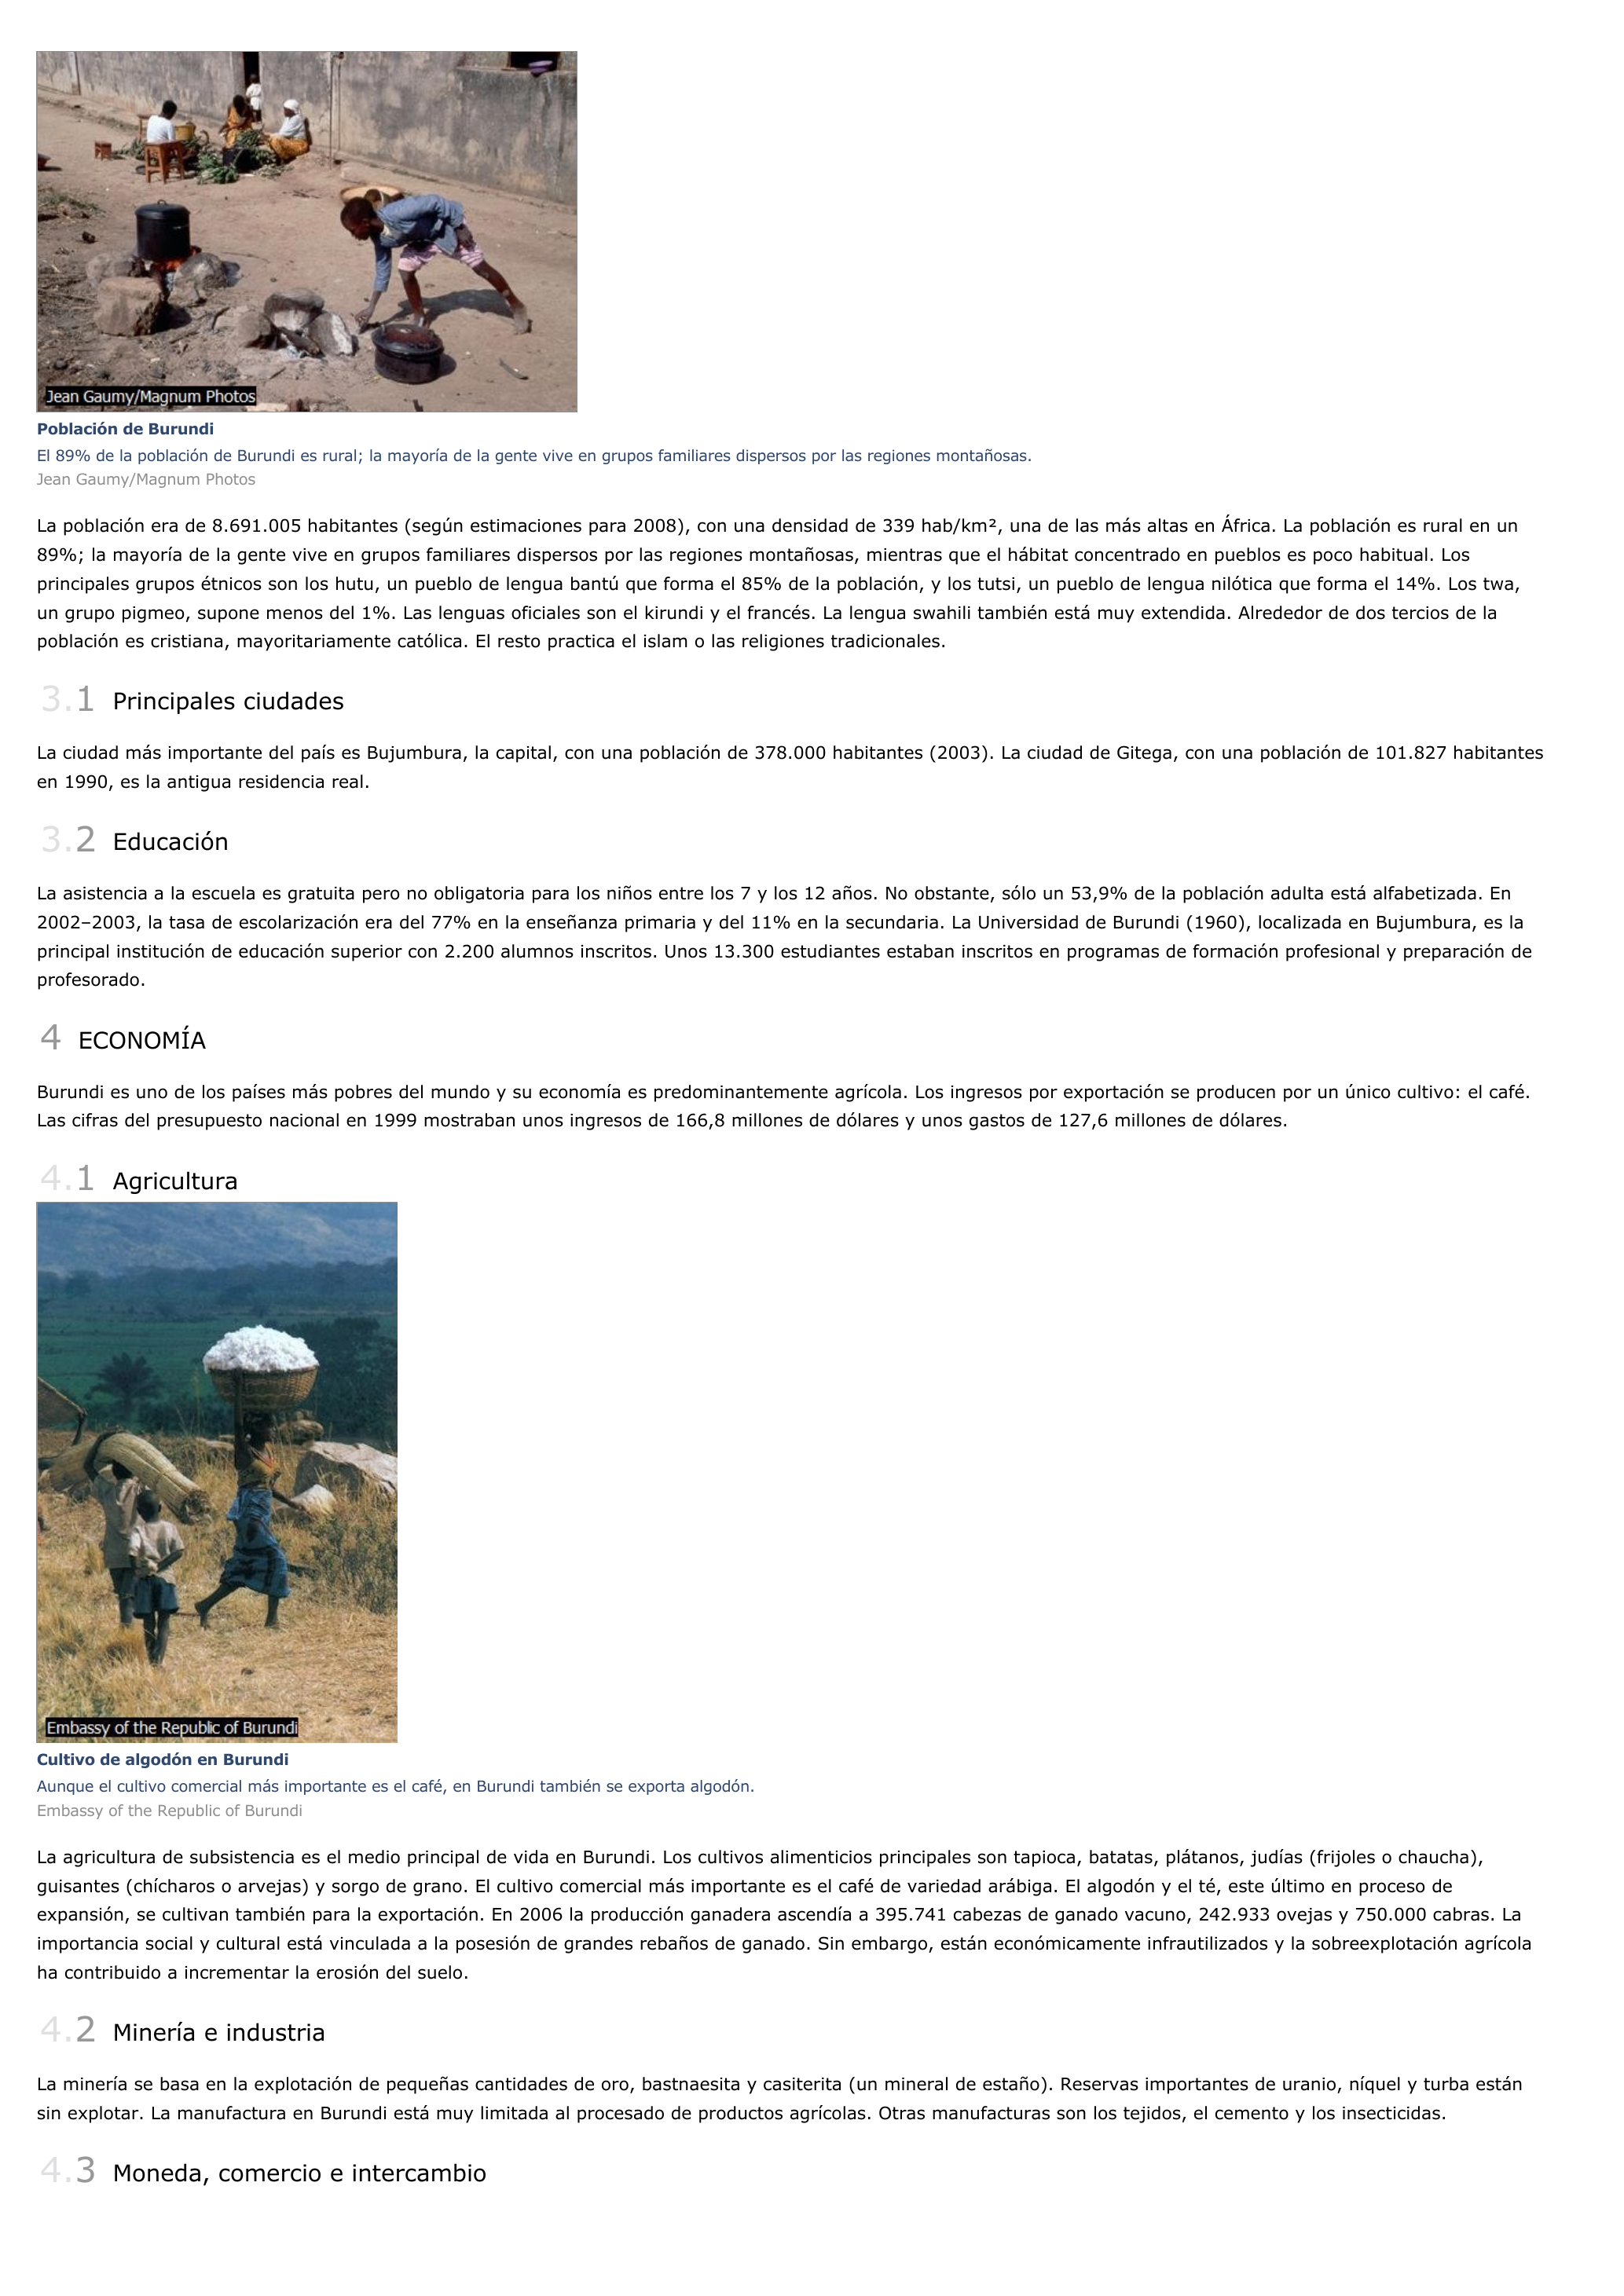 Prévisualisation du document Burundi - geografía.